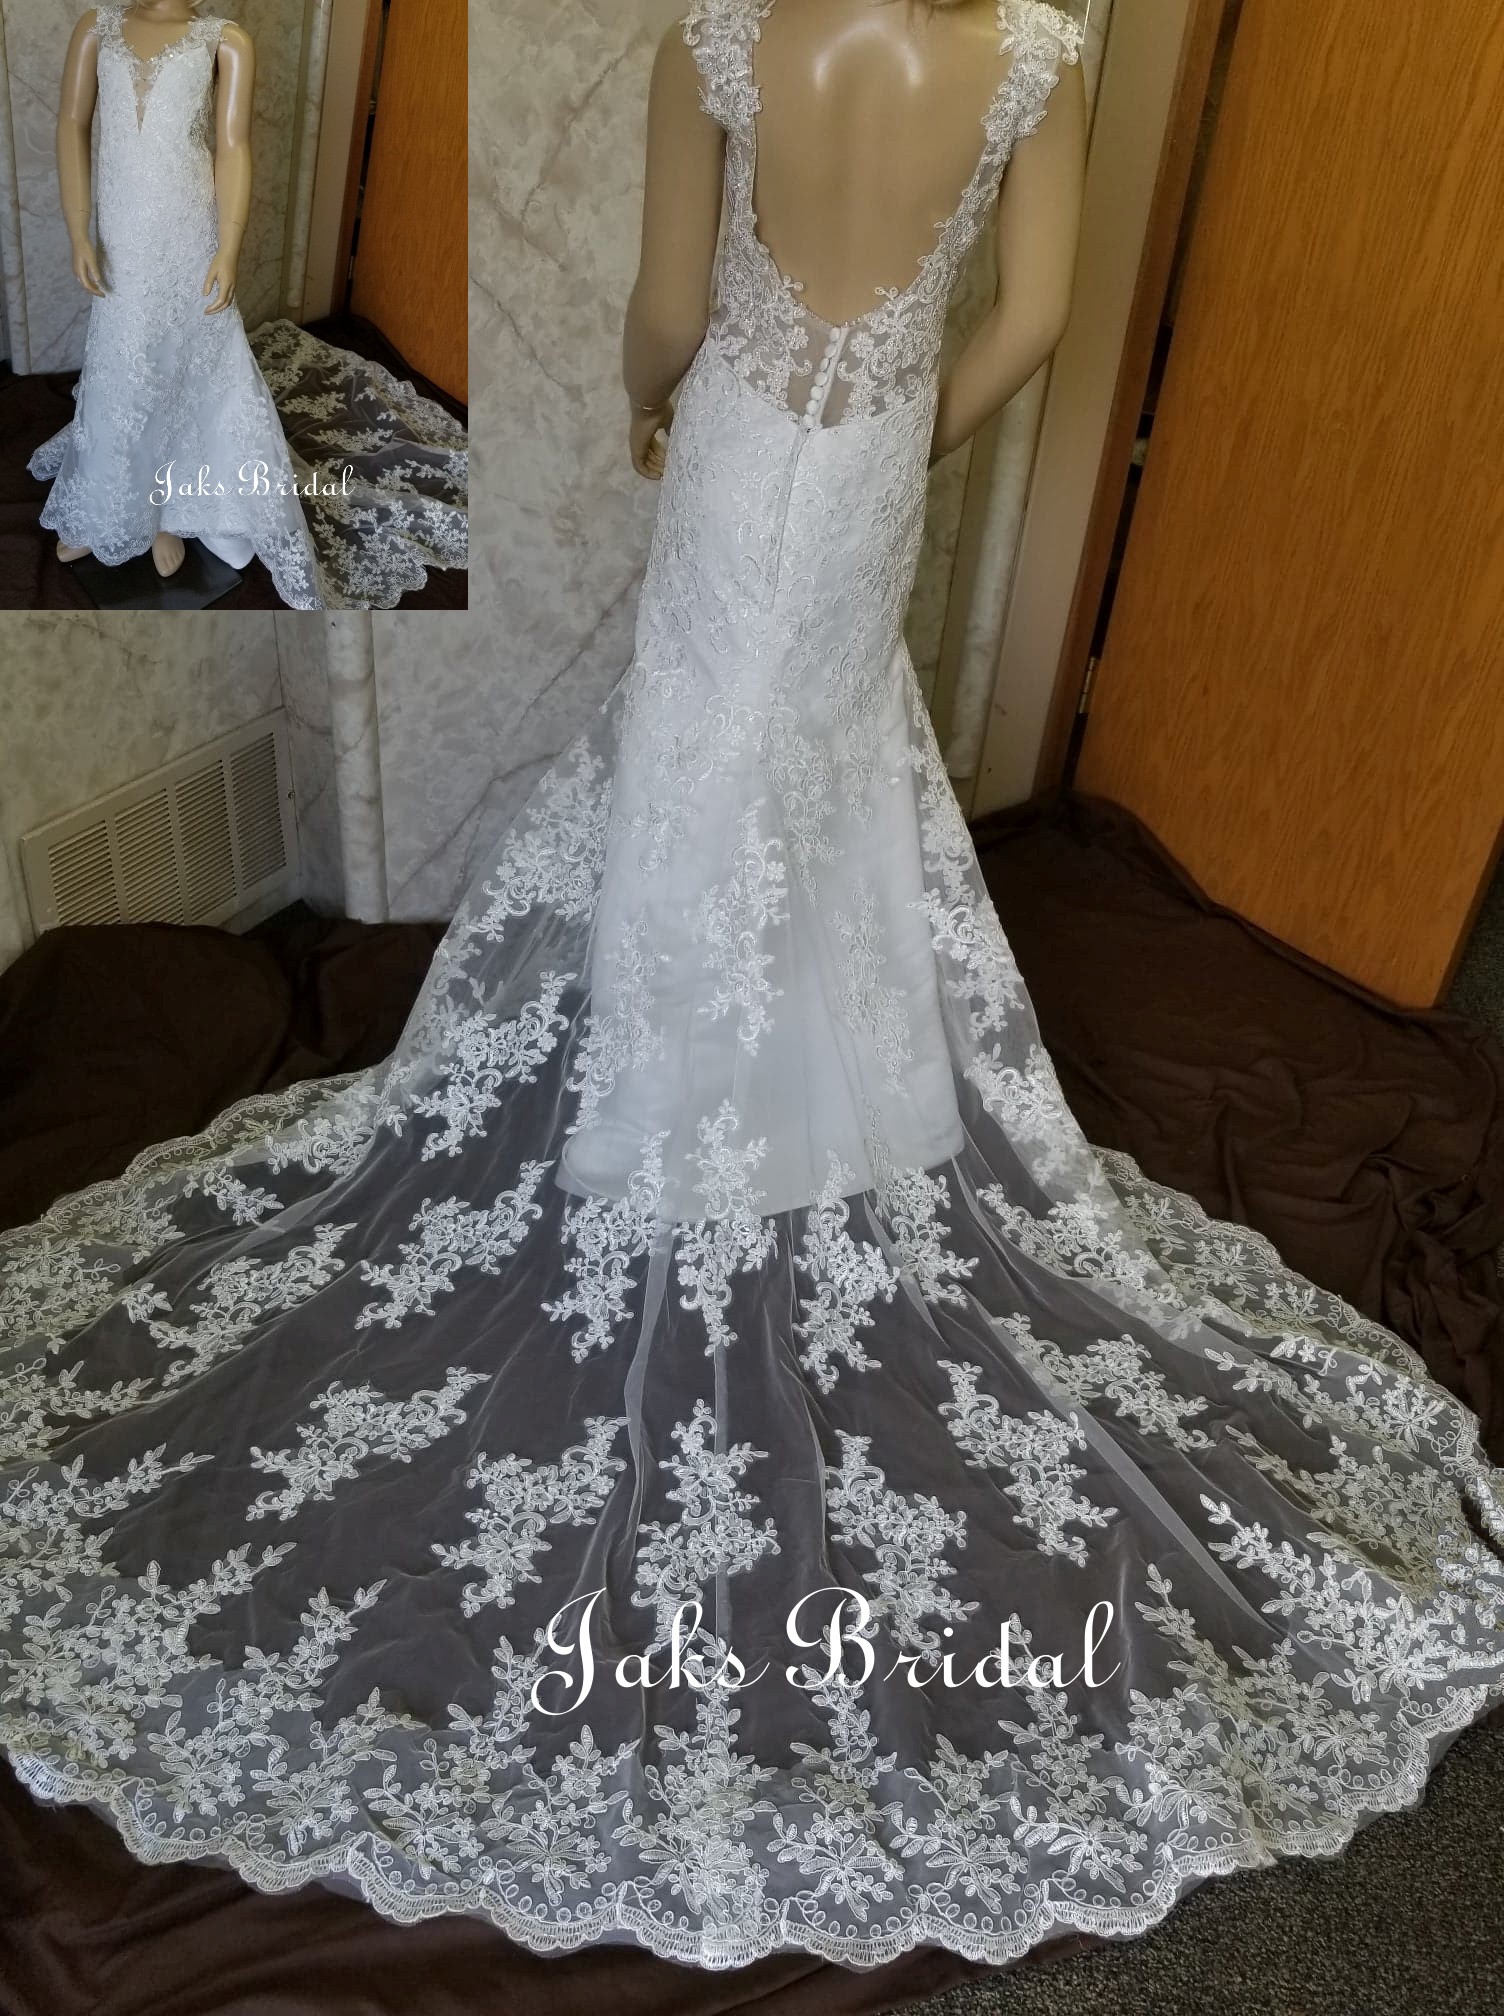 match the bride's wedding dress for a flower girl